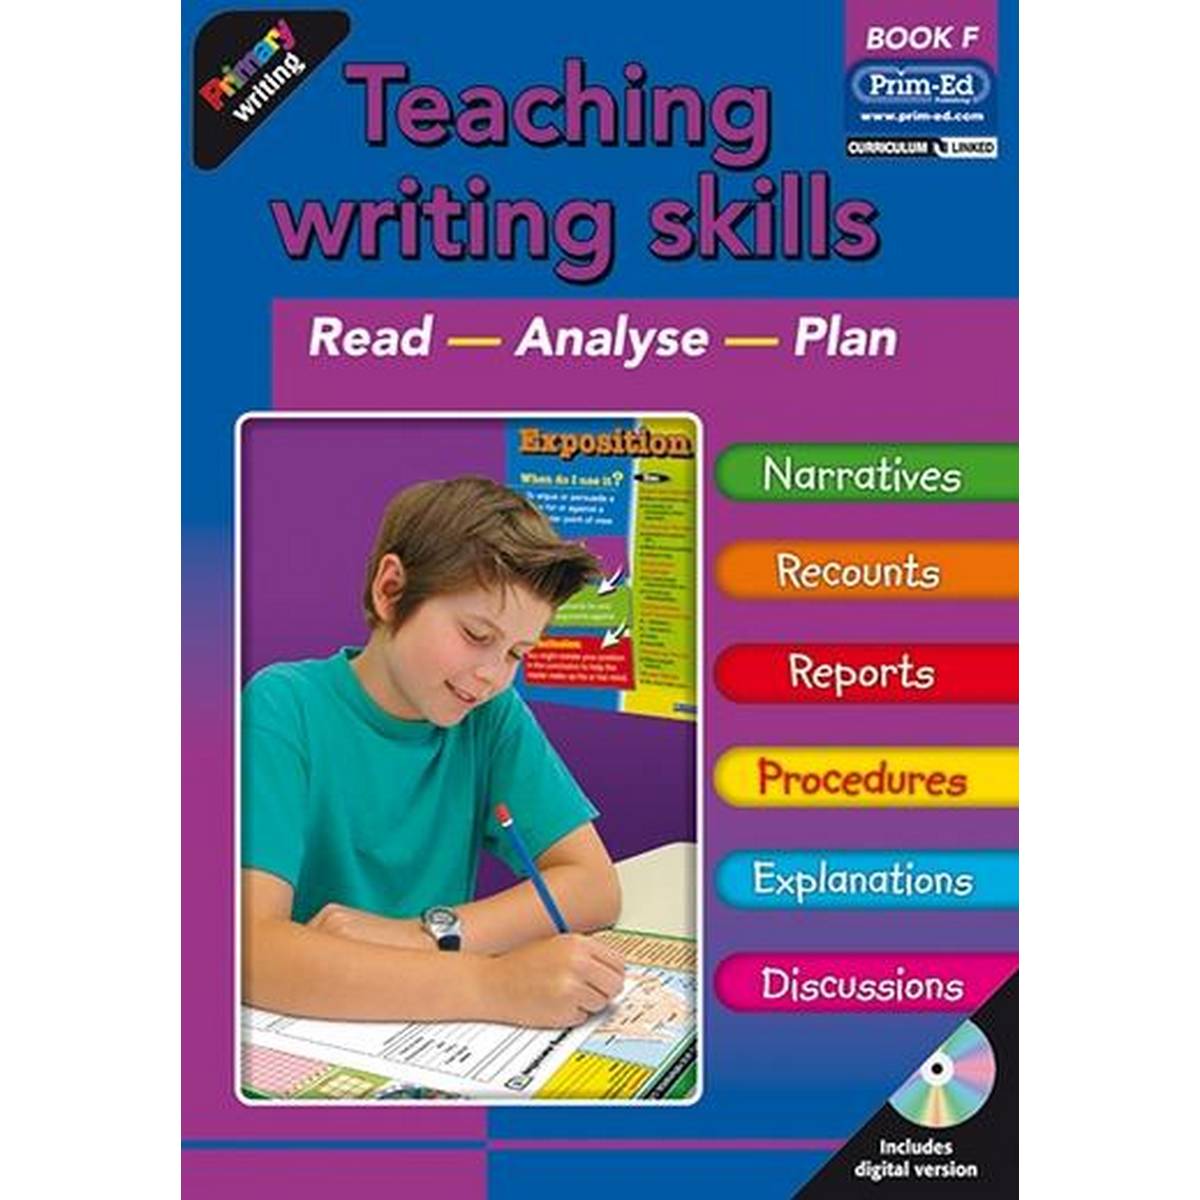 TEACHING WRITING SKILLS: BOOK F